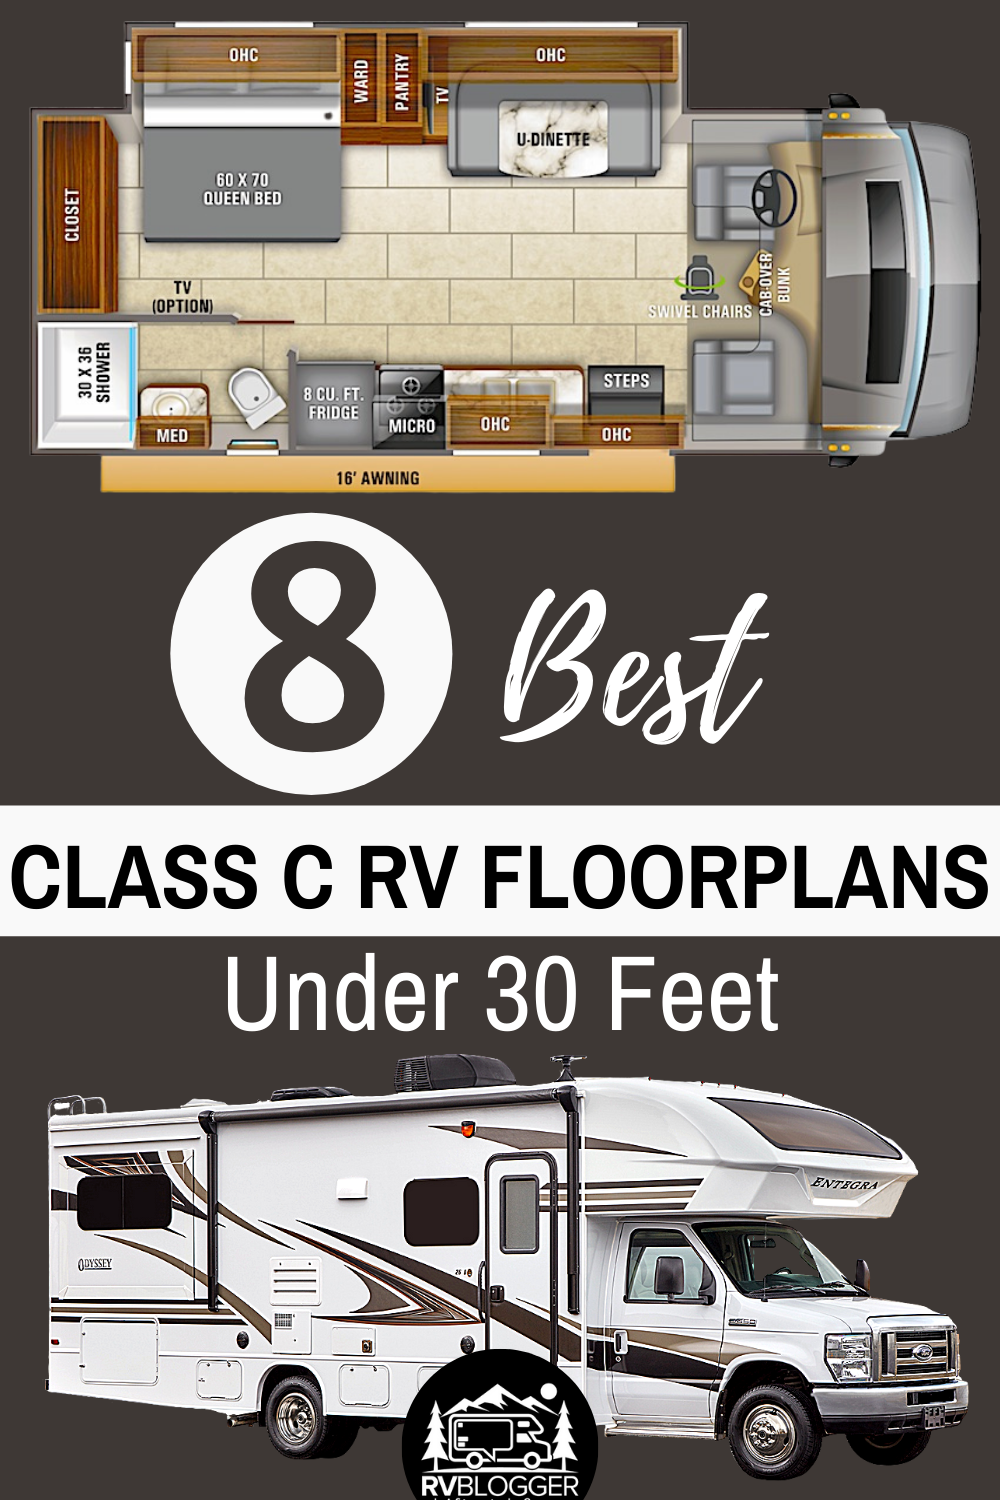 The 8 Best Class C Rv Floor Plans Under 30 Feet